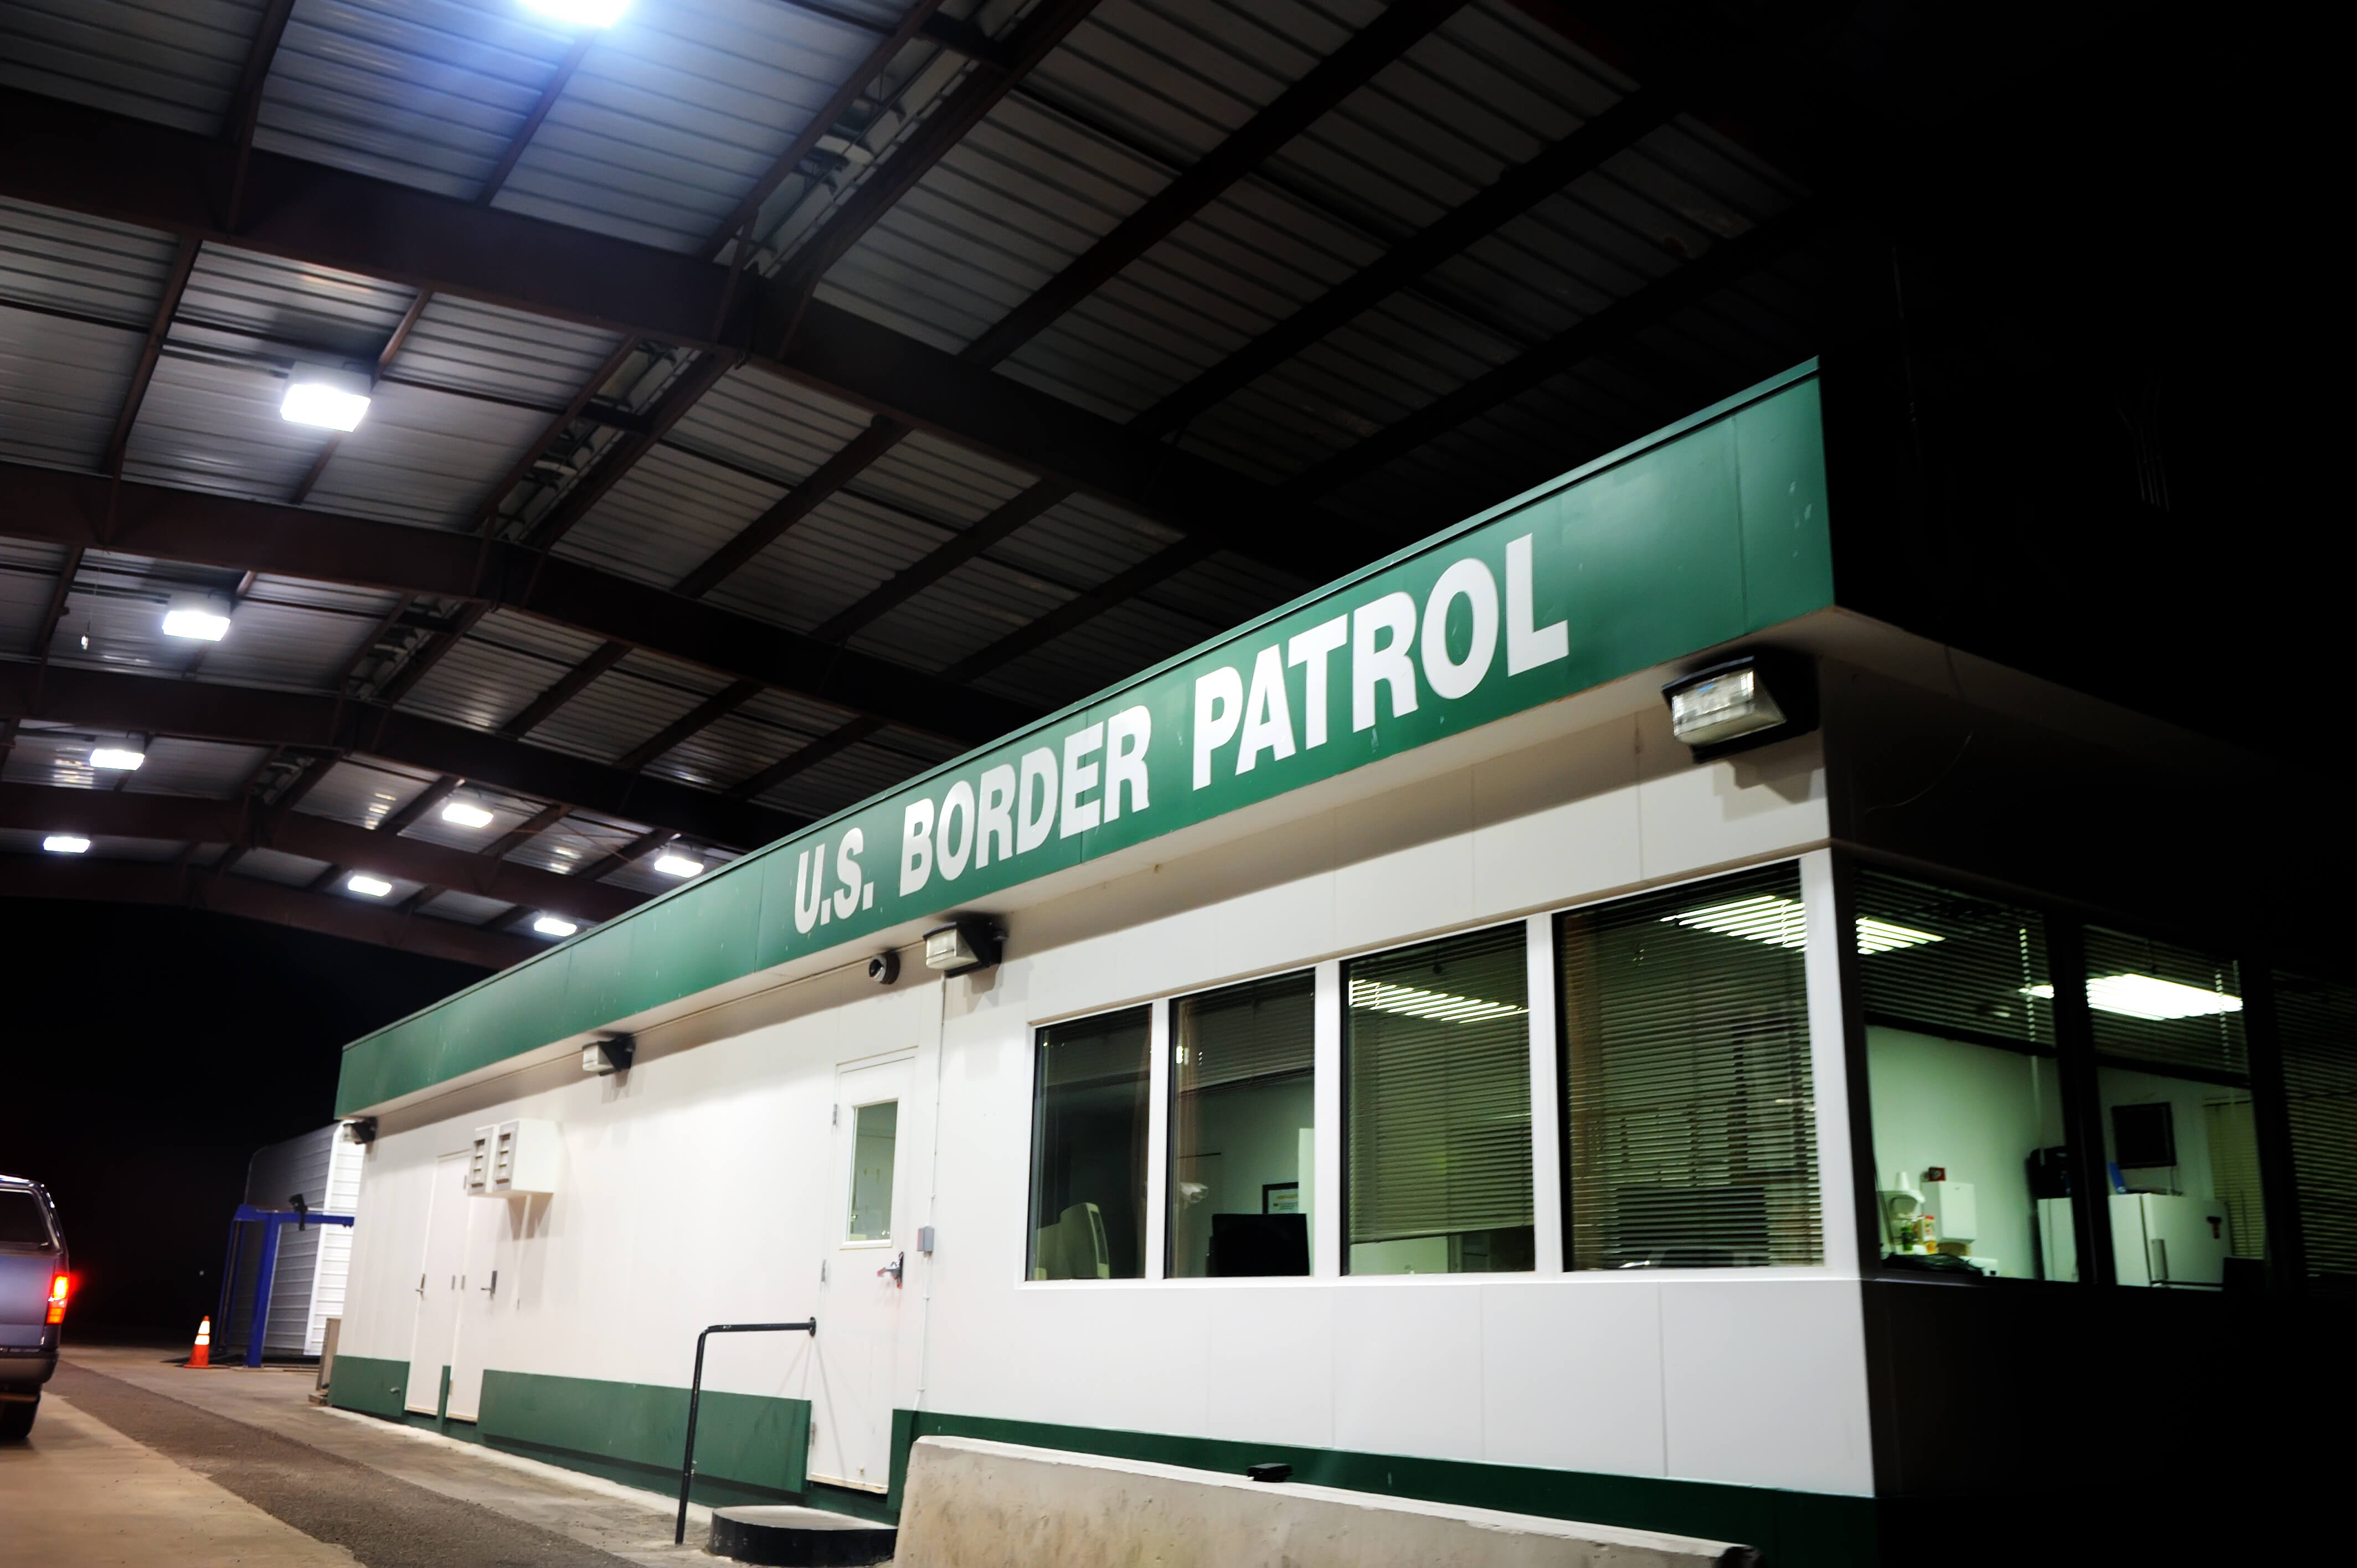 a US border patrol building